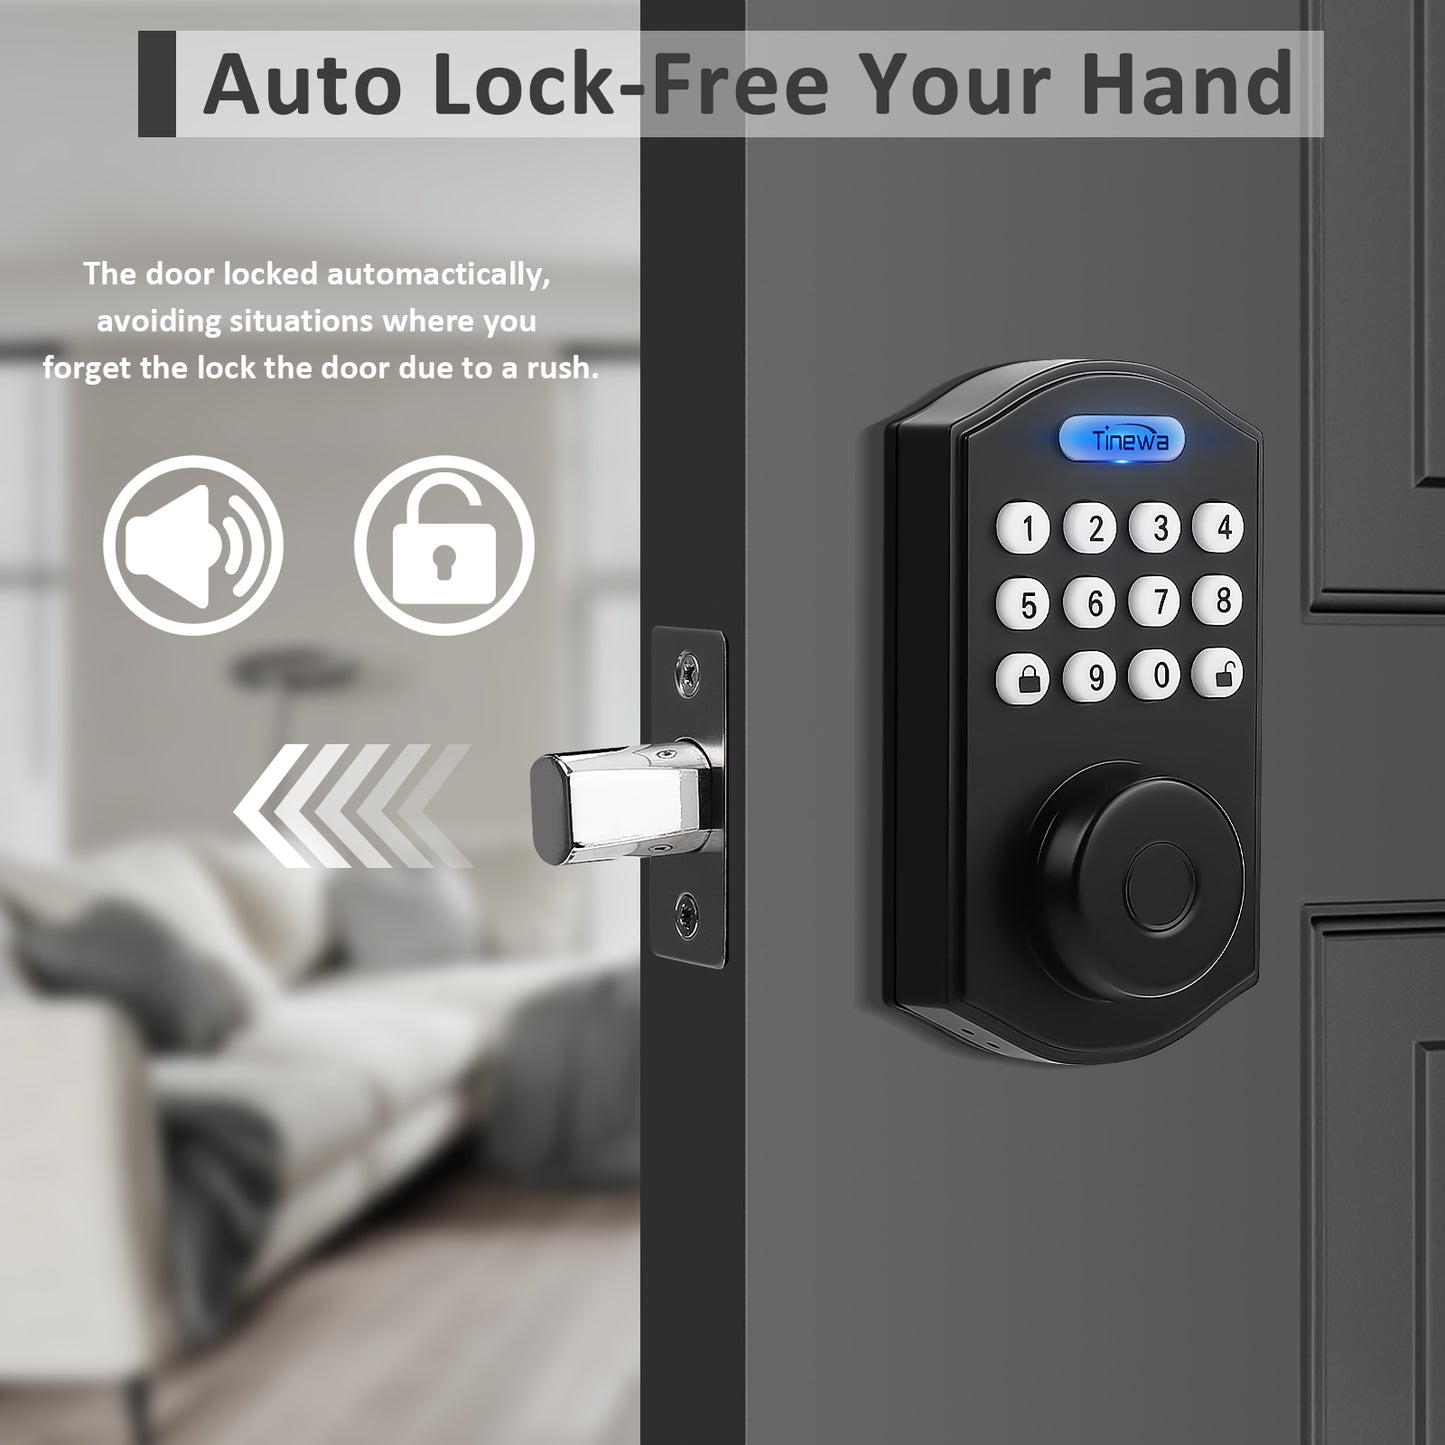 Tinewa Fingerprint Entry Door Lock, Round Smart Lock, Electronic Digital Keypad Deadbolt with Keys, Auto Lock, Anti-Peeping Password, App Control DLE601BK